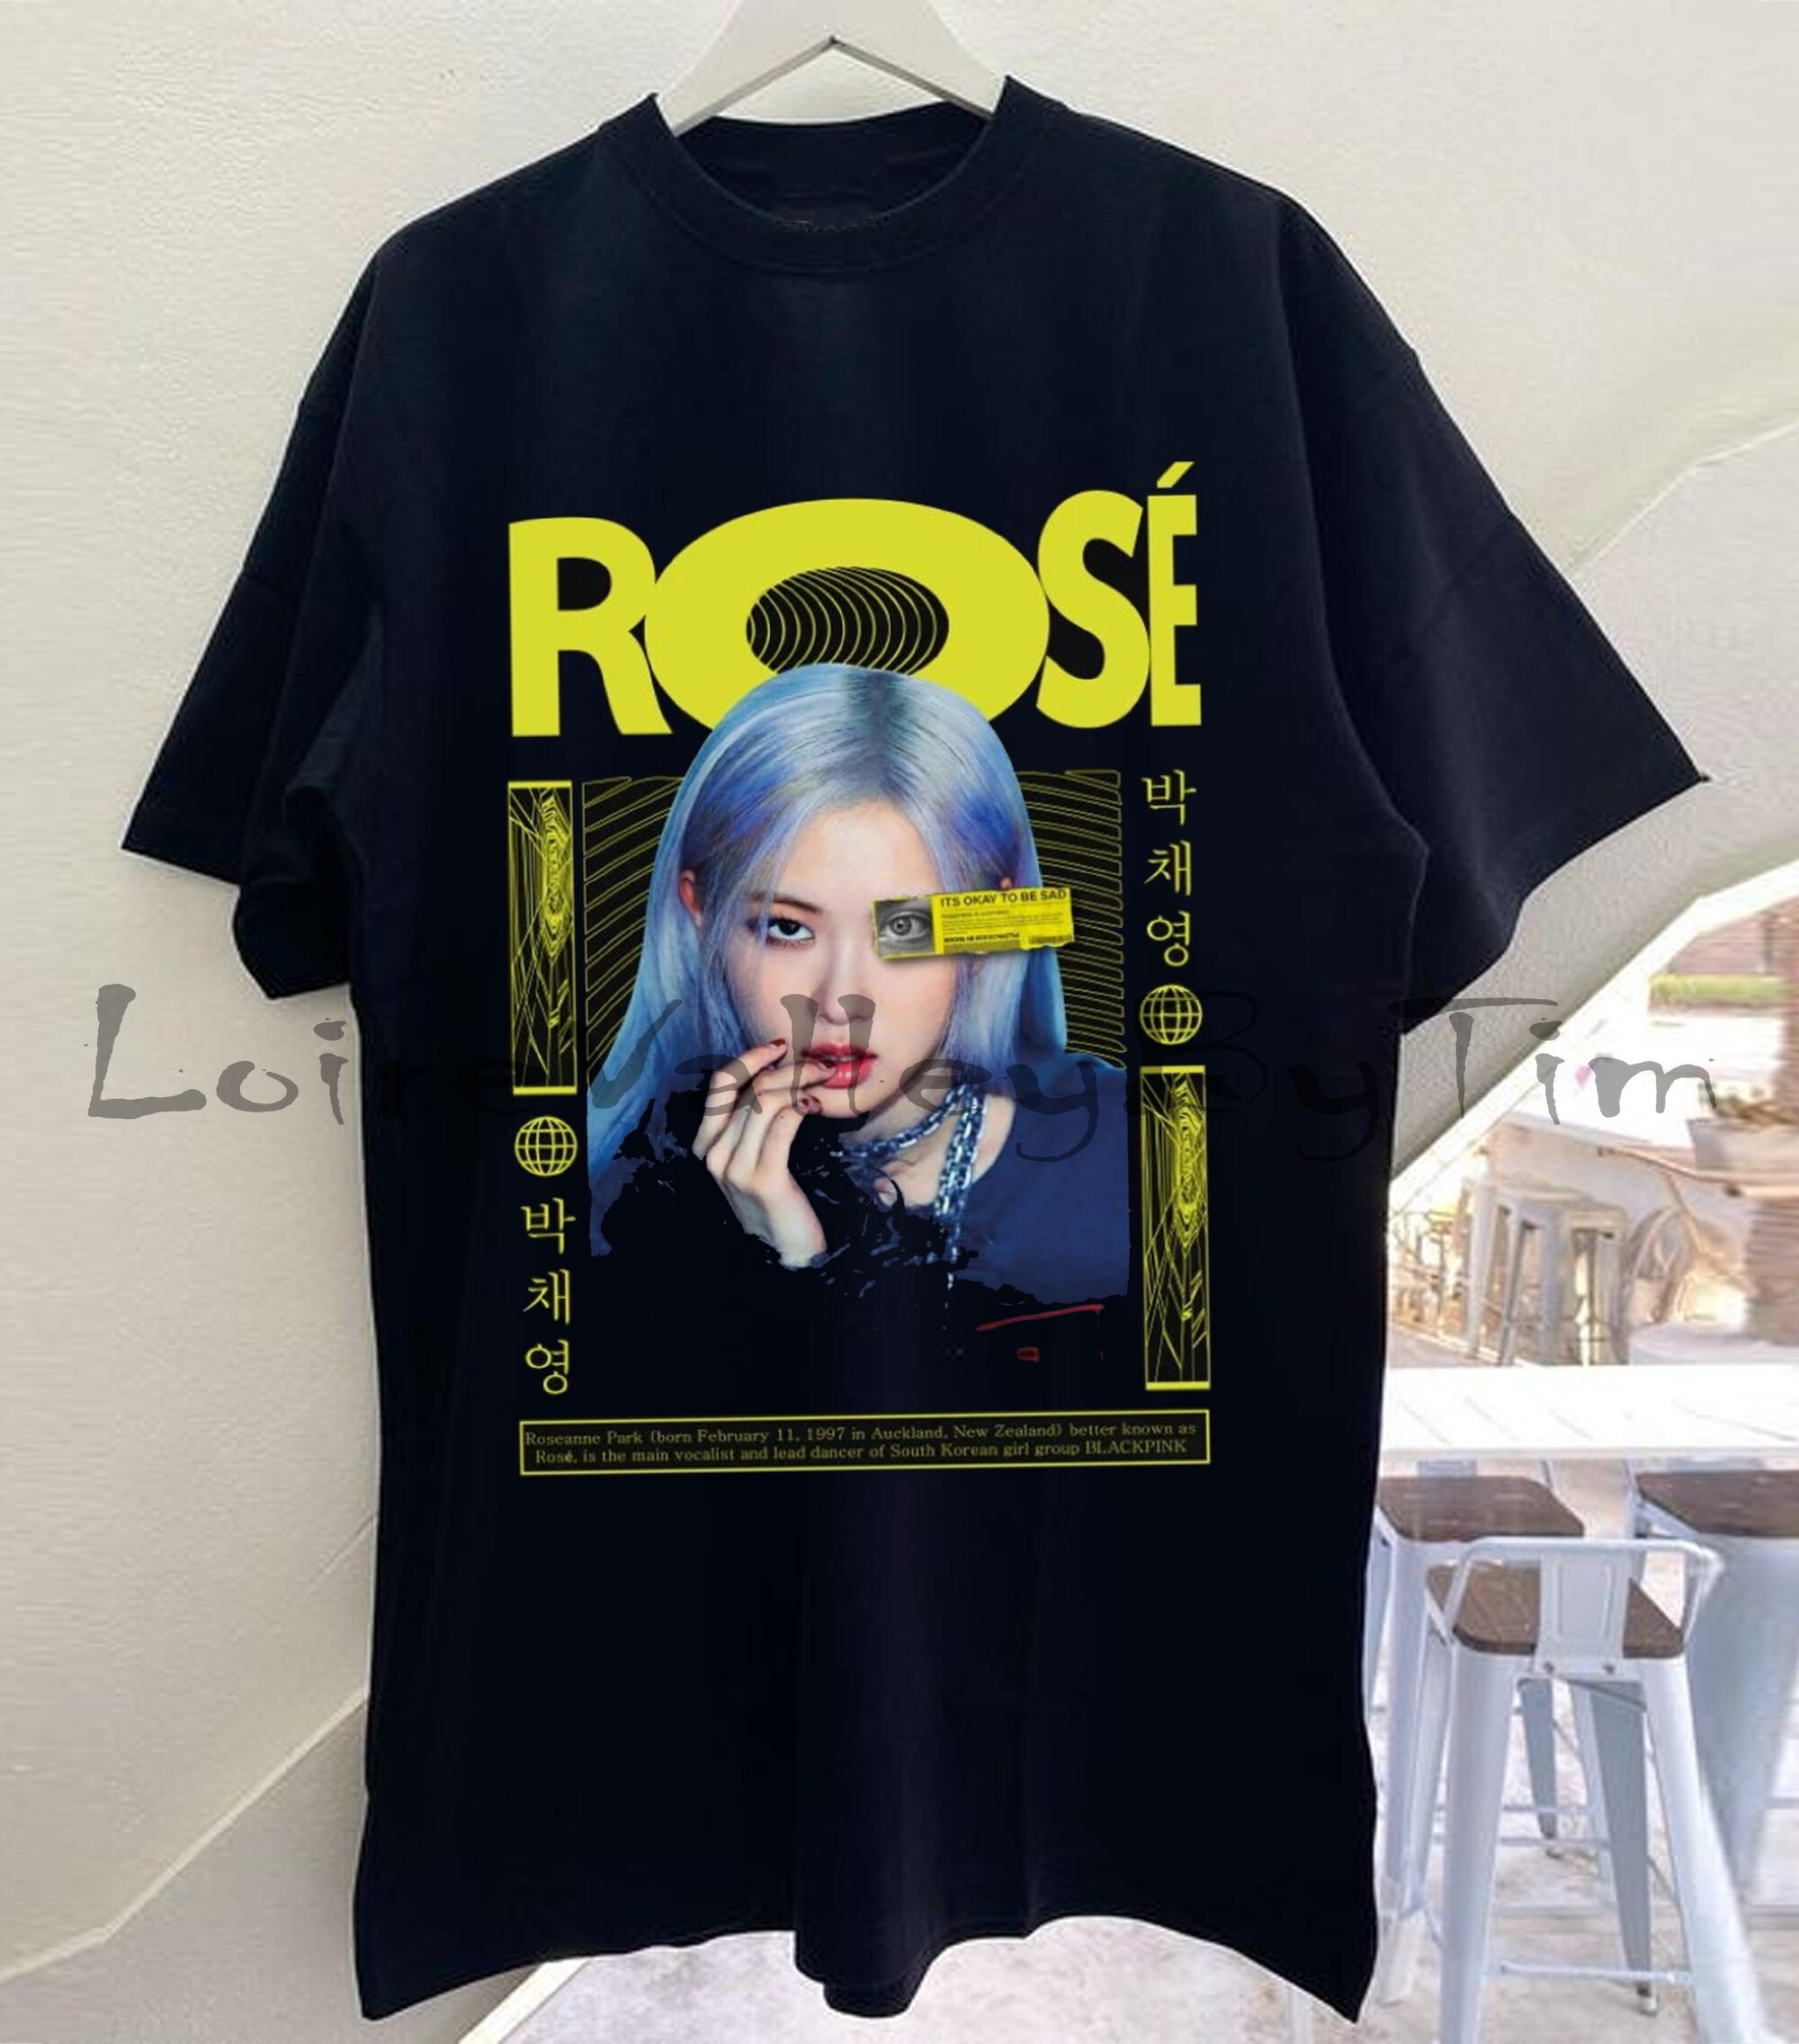 Discover Maglietta T-shirt Rose Blackpink Per Uomo Donna Bambini - Kpop Band Girls Regalo Per Blinks